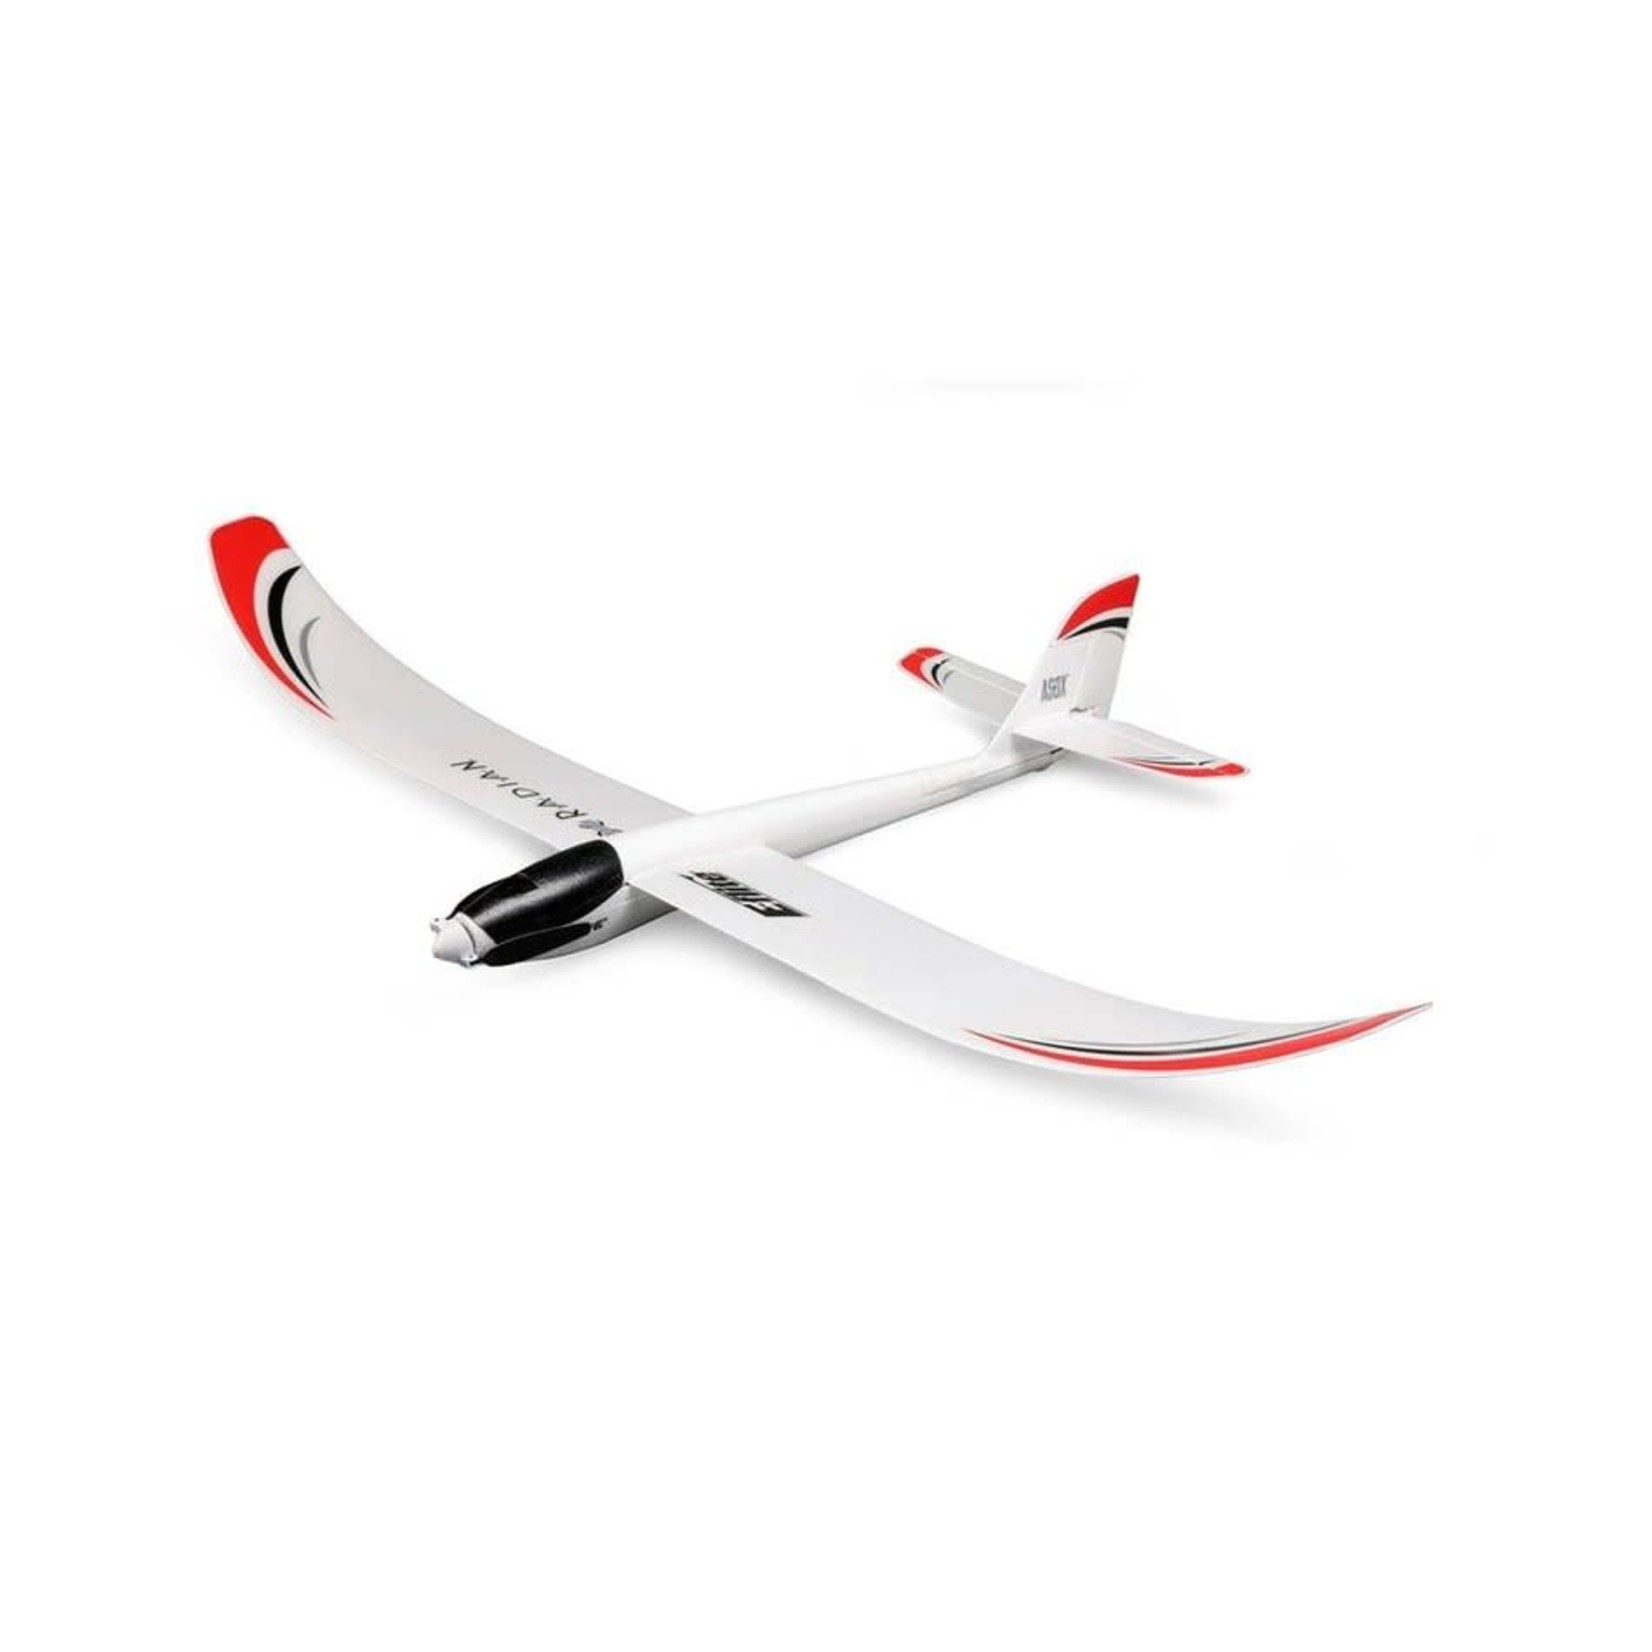 E-flite E-flite UMX Radian Bind-N-Fly Basic Electric Airplane (730mm) w/AS3X & SAFE #EFLU2950